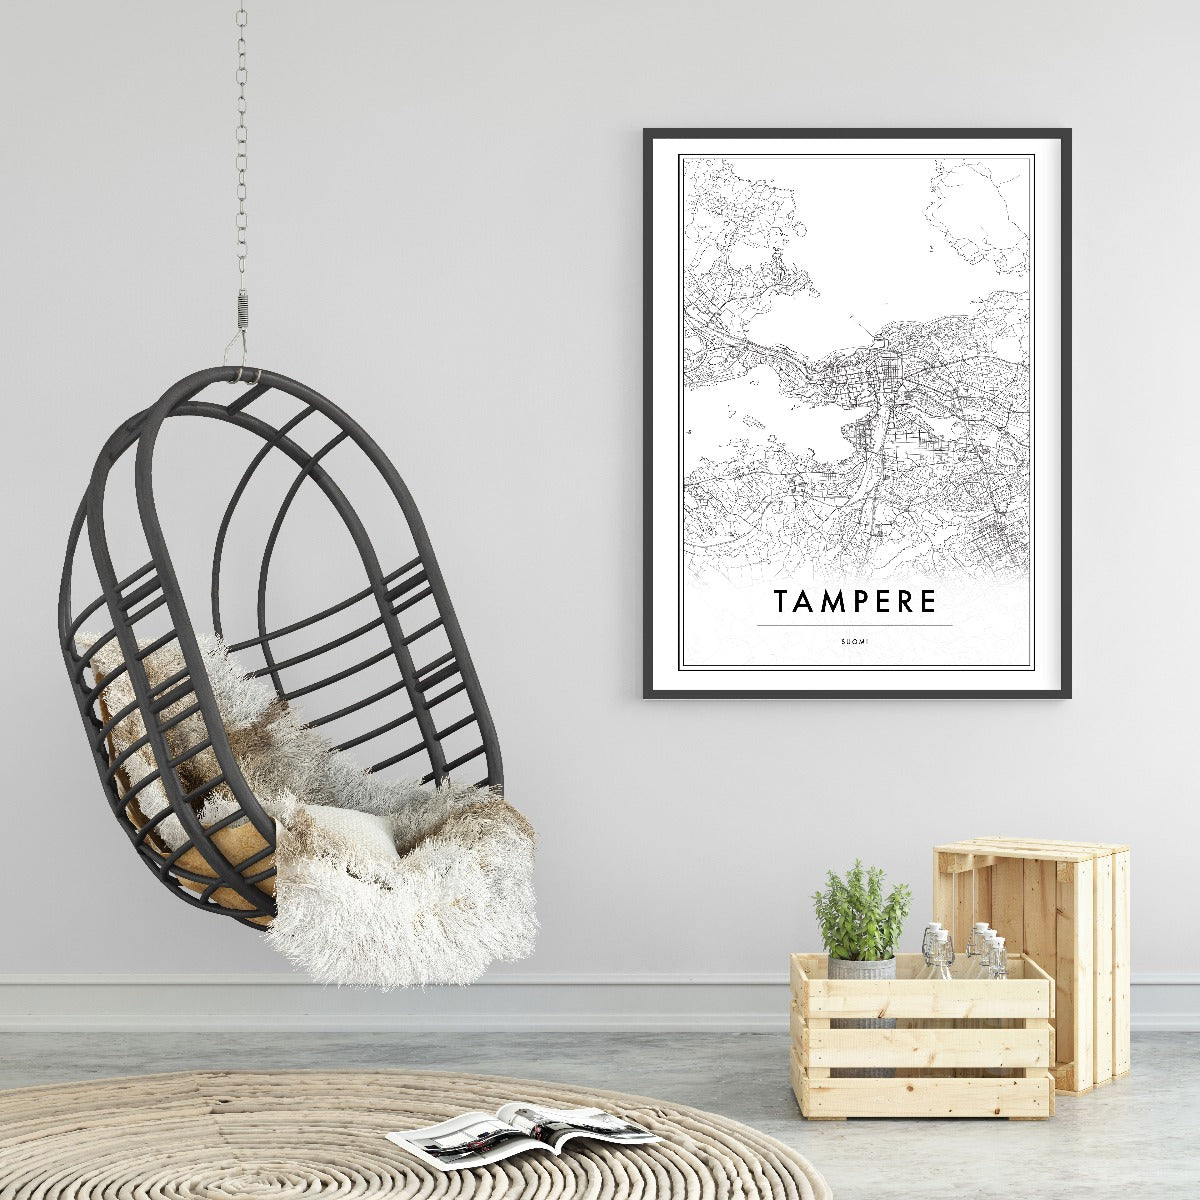  Tampere Finland kaartposters